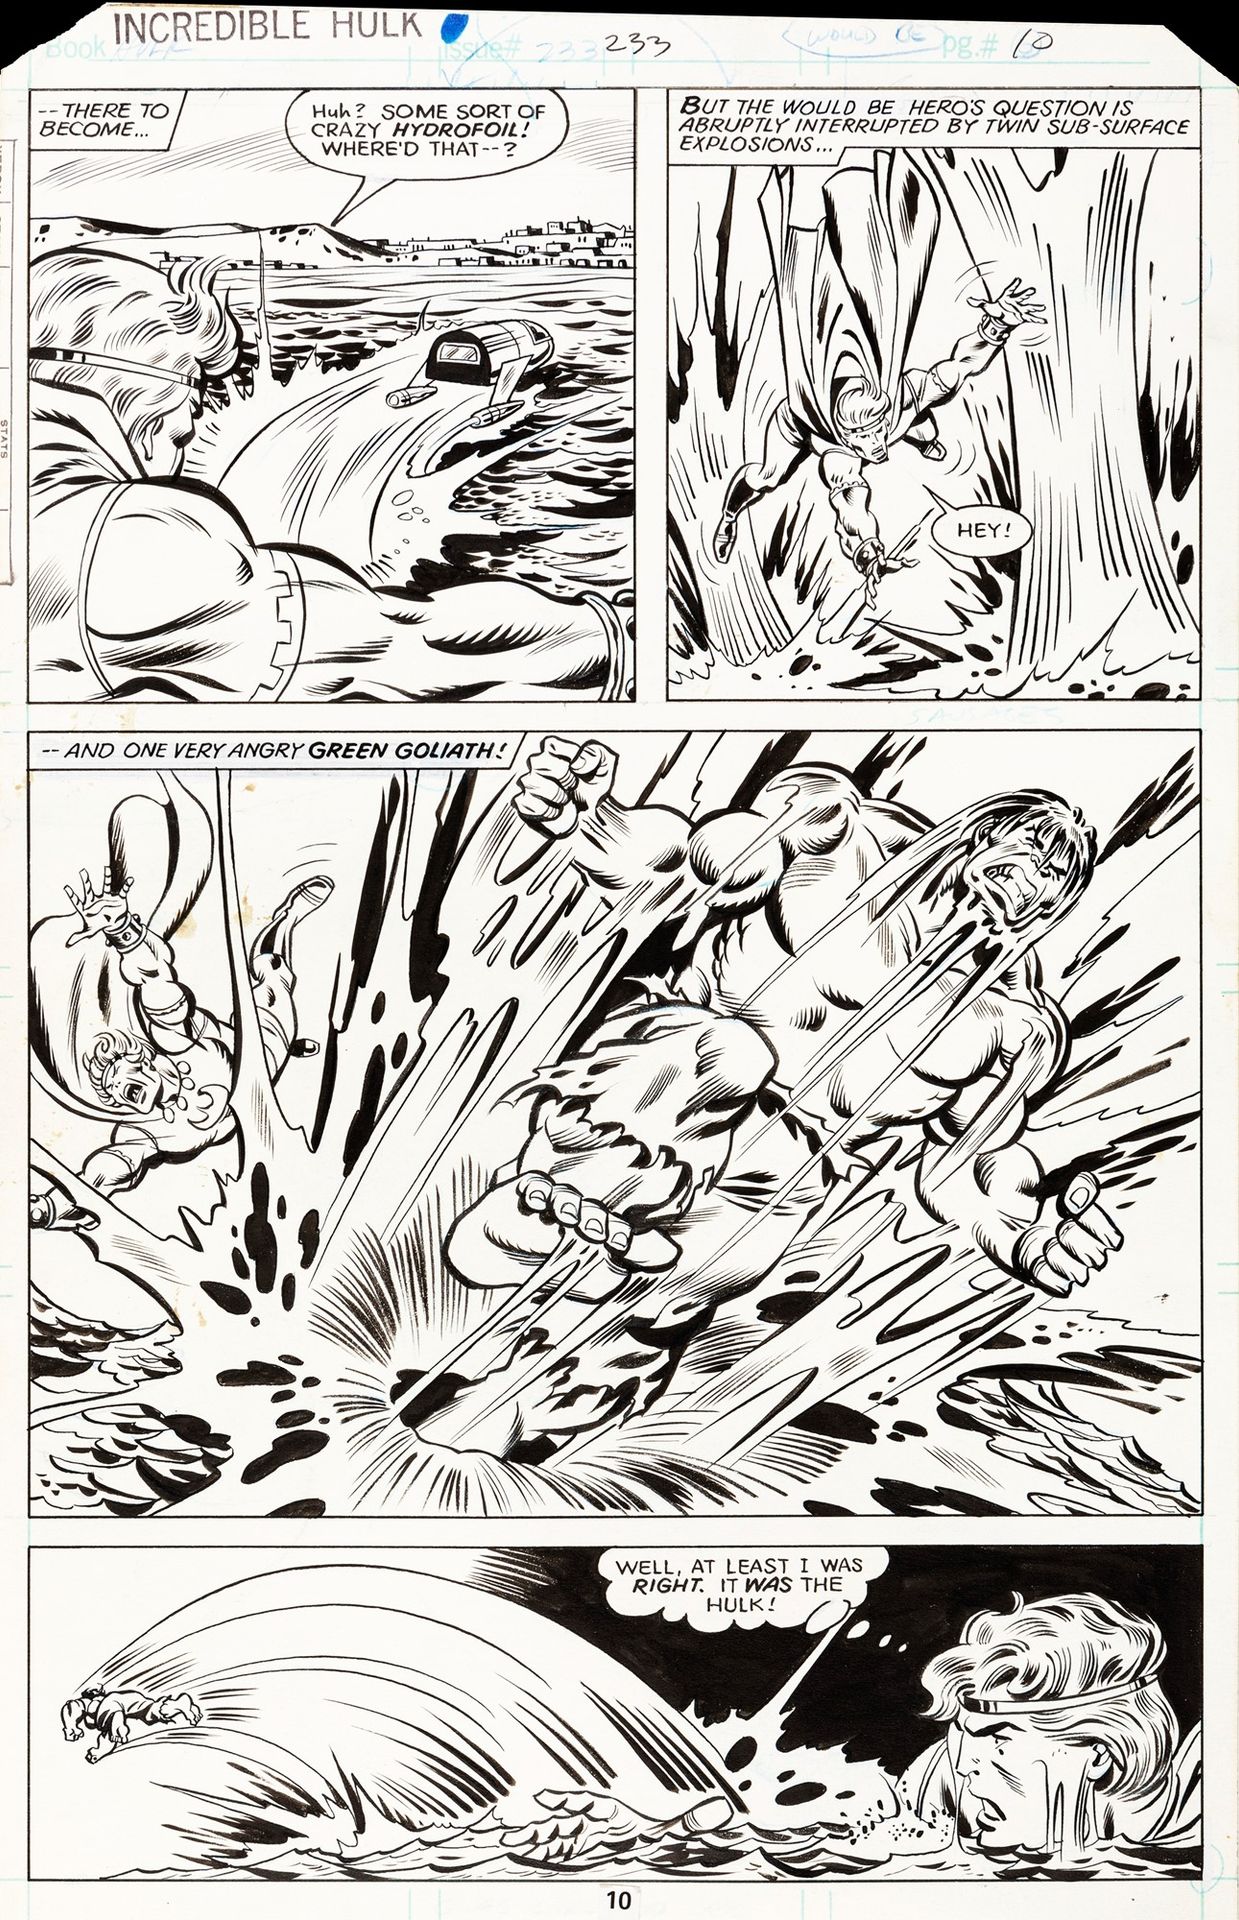 Sal BUSCEMA 不可思议的绿巨人--......在海湾的底部!, 1979

铅笔和墨水在Marvel薄纸板上
27 x 40,5 cm
Buscema&hellip;